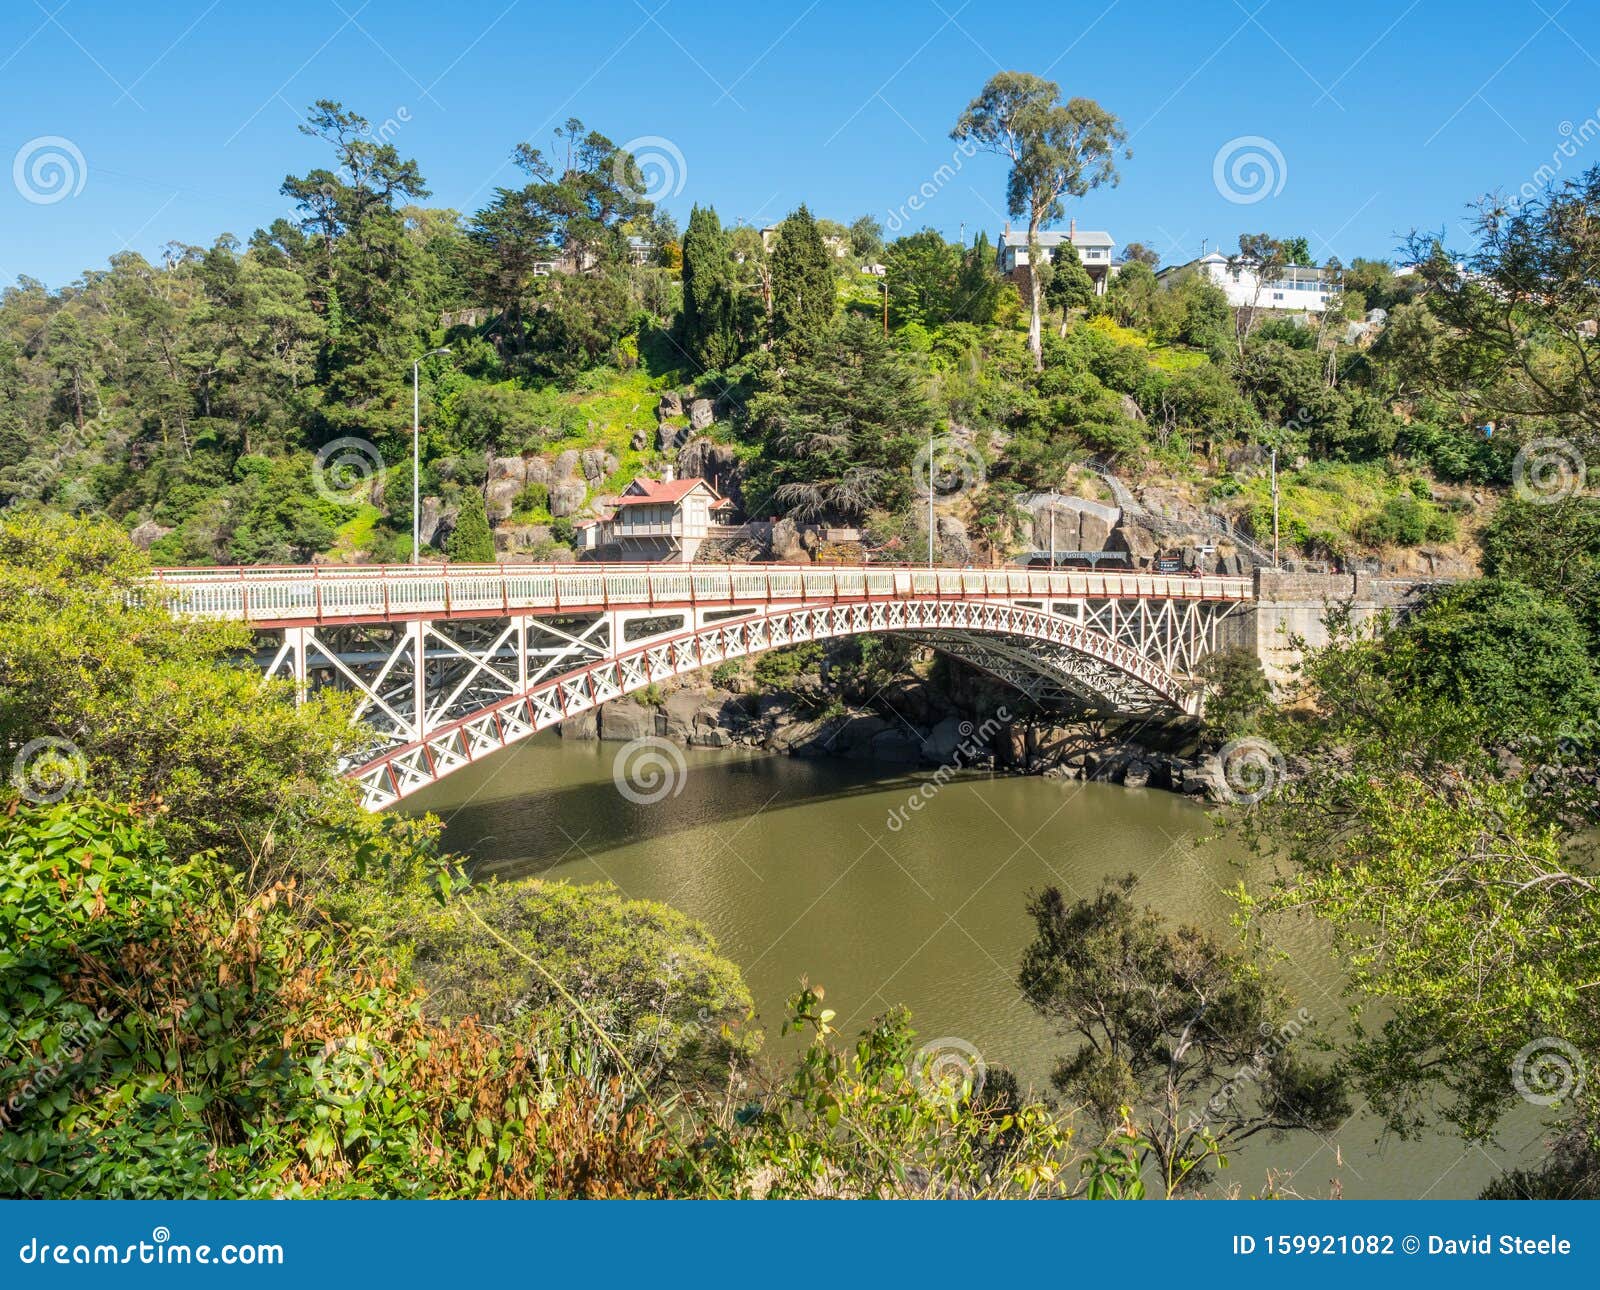 kings bridge in launceston, tasmania